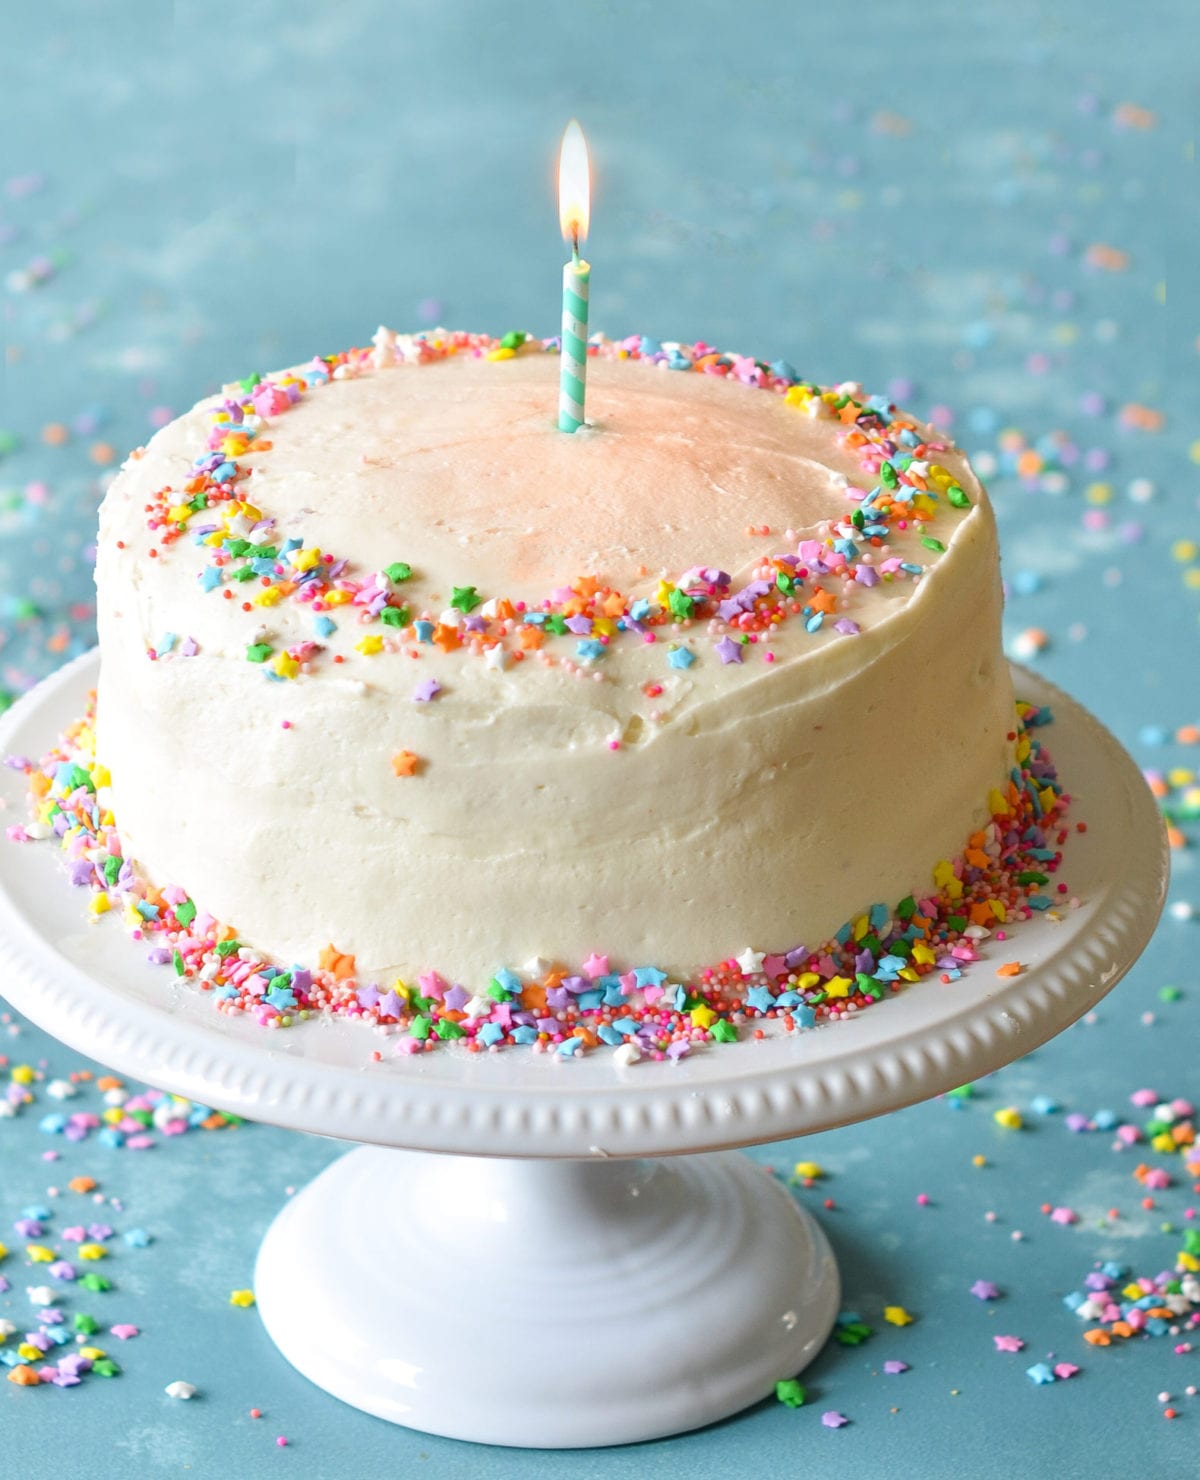 15 amazing and creative birthday cake ideas for girls-mncb.edu.vn